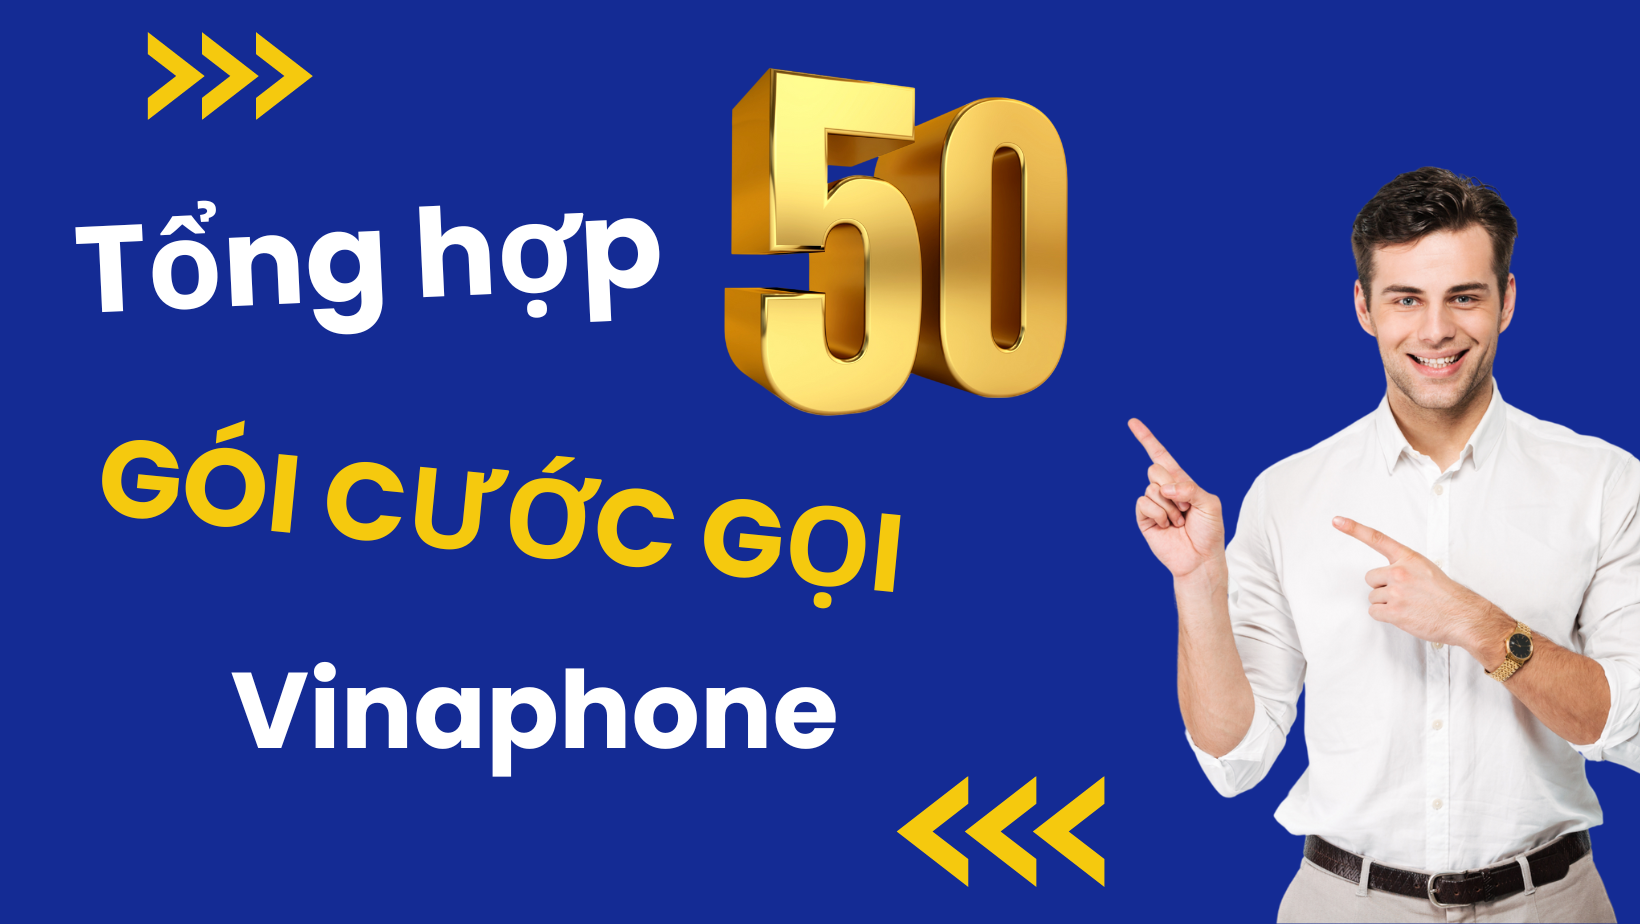 tong-hop-50-goi-cuoc-goi-vinaphone